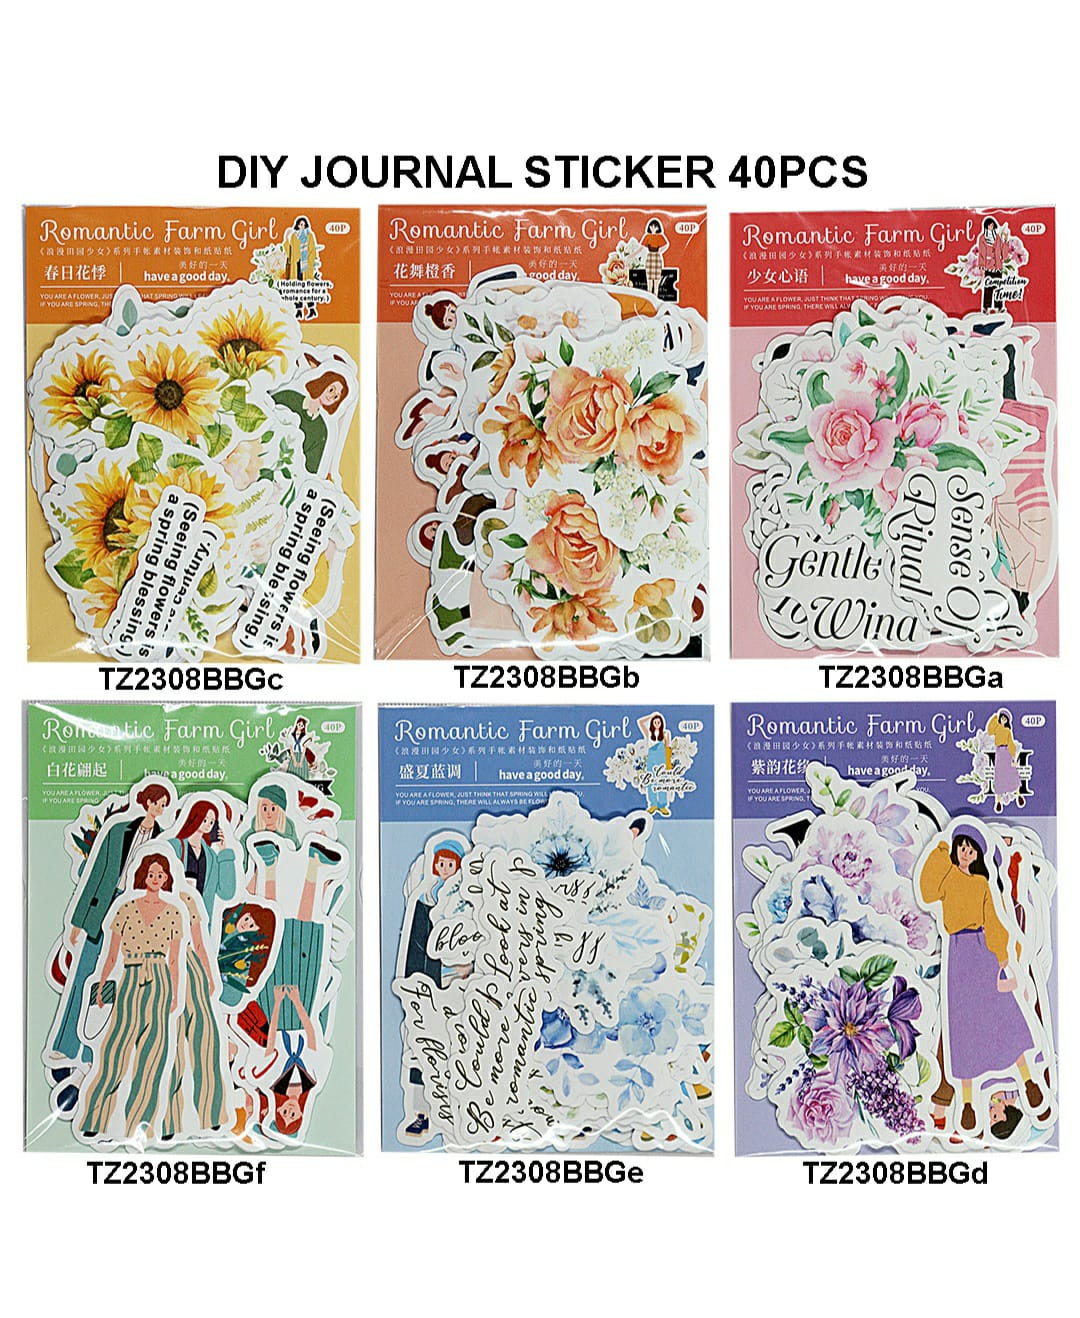 Diy Journal Sticker 40Pcs 292 Tz2308Bbg | INKARTO